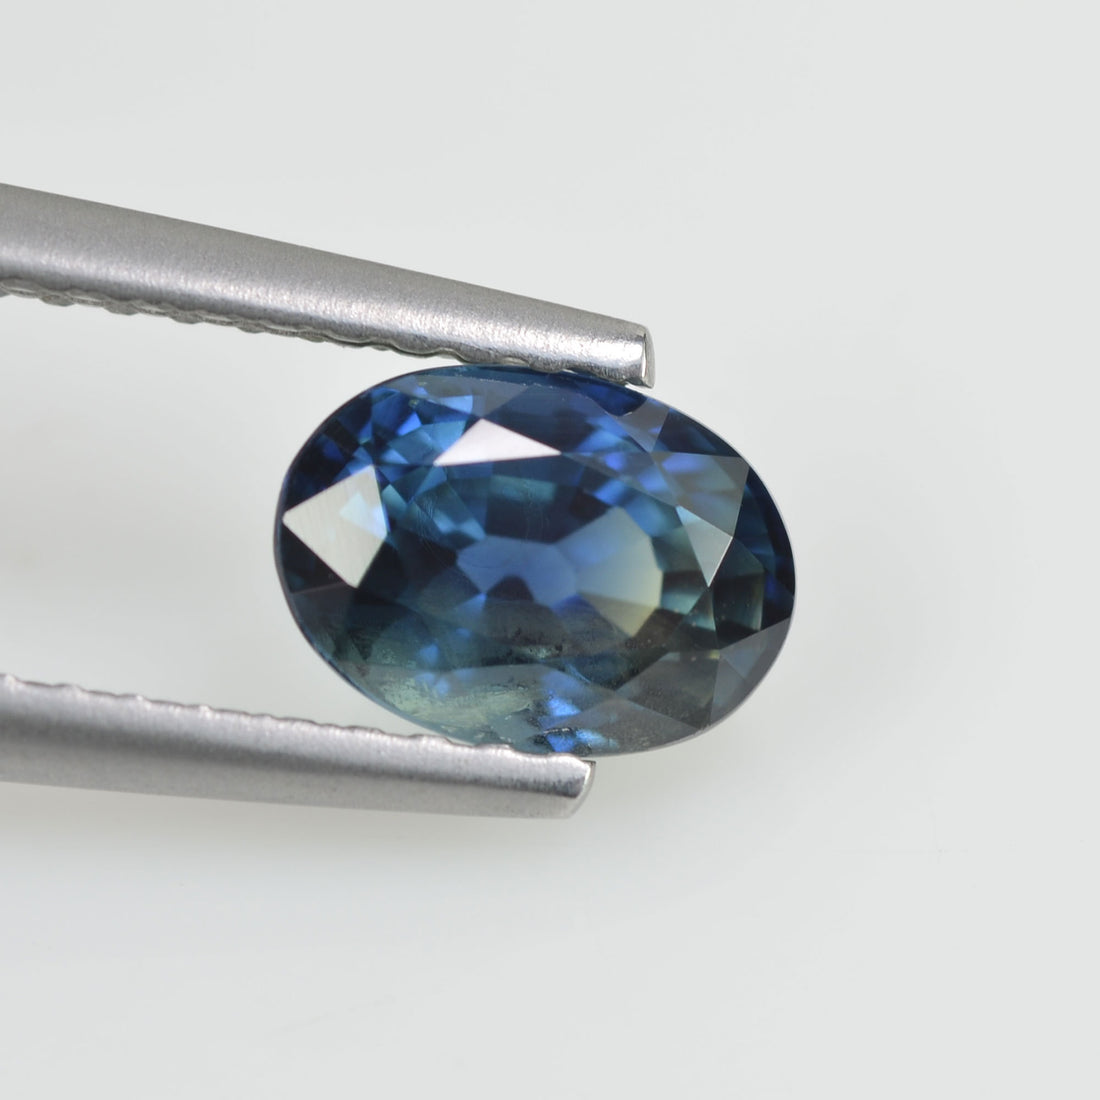 1.39  cts Natural Blue Green Teal Sapphire Loose Gemstone Oval Cut - Thai Gems Export Ltd.